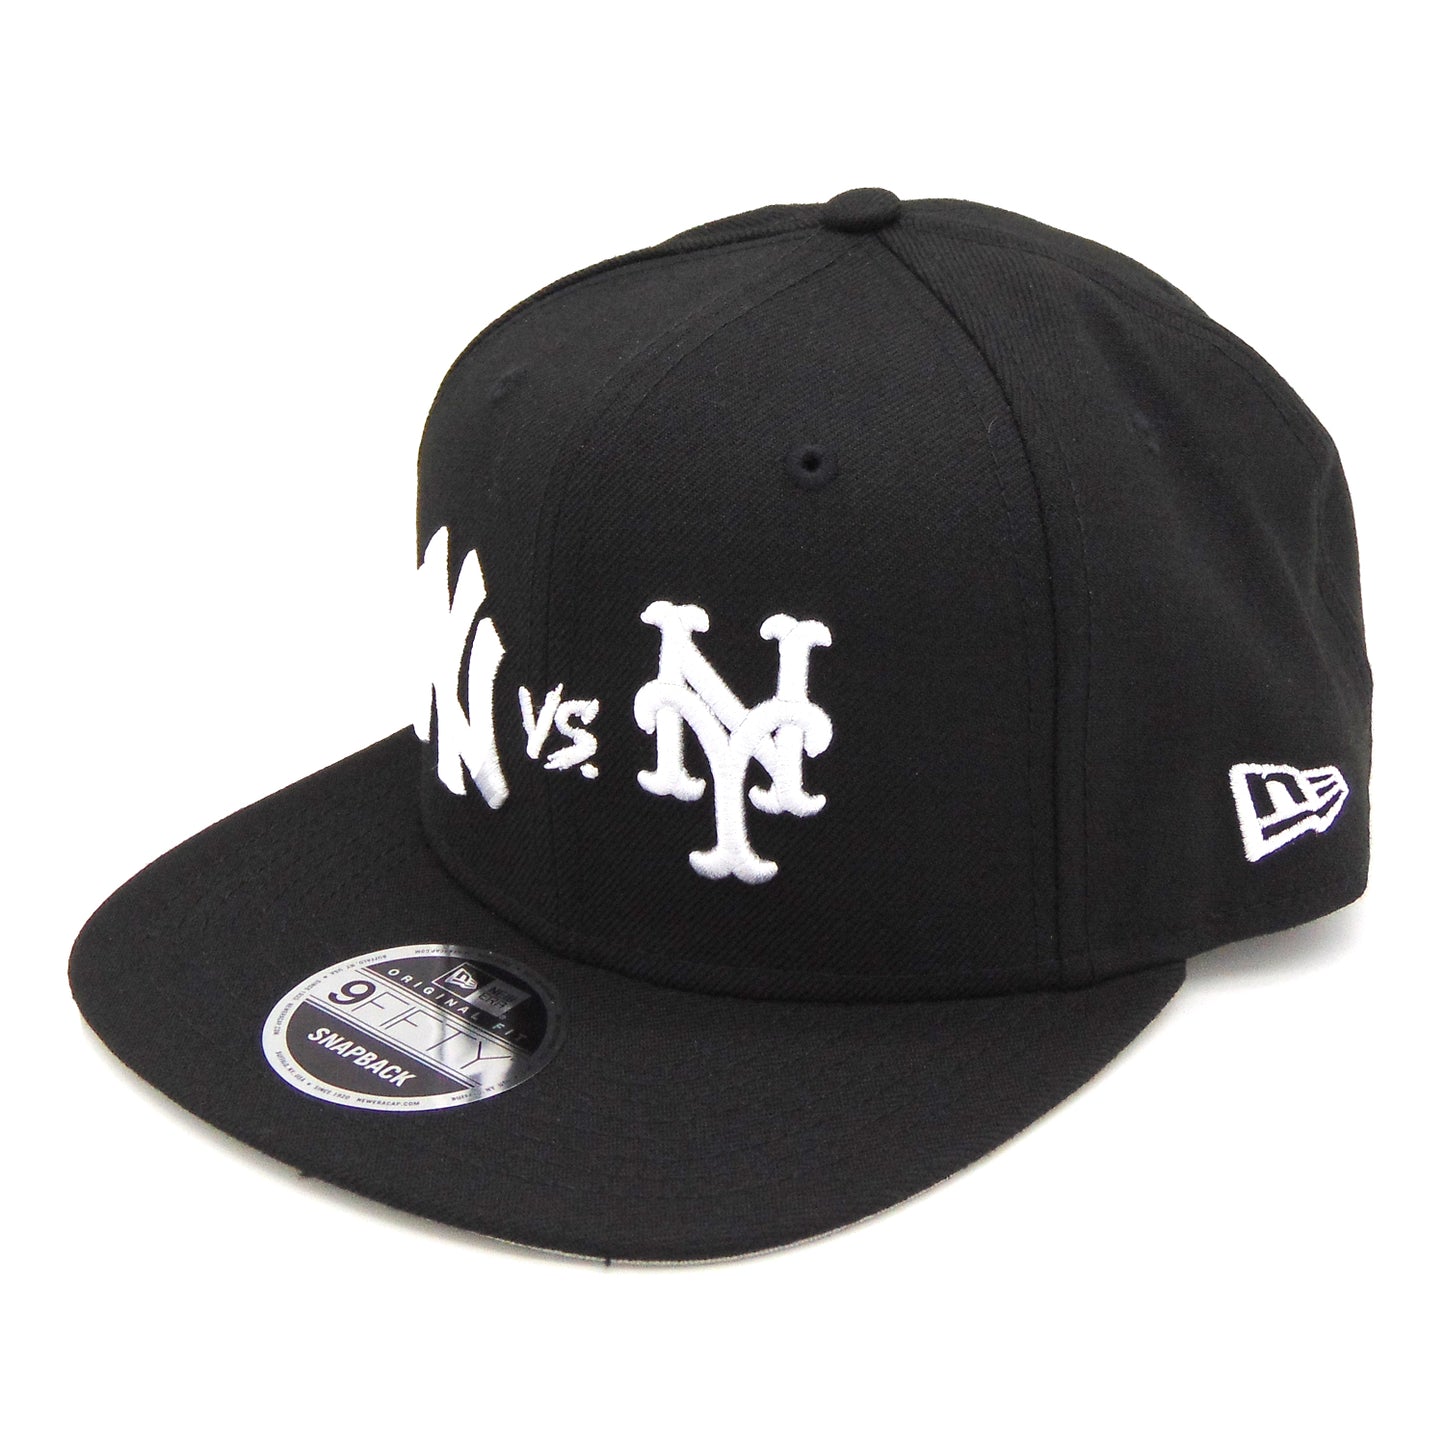 Yankees Vs Mets New Era Snapback Cap Black